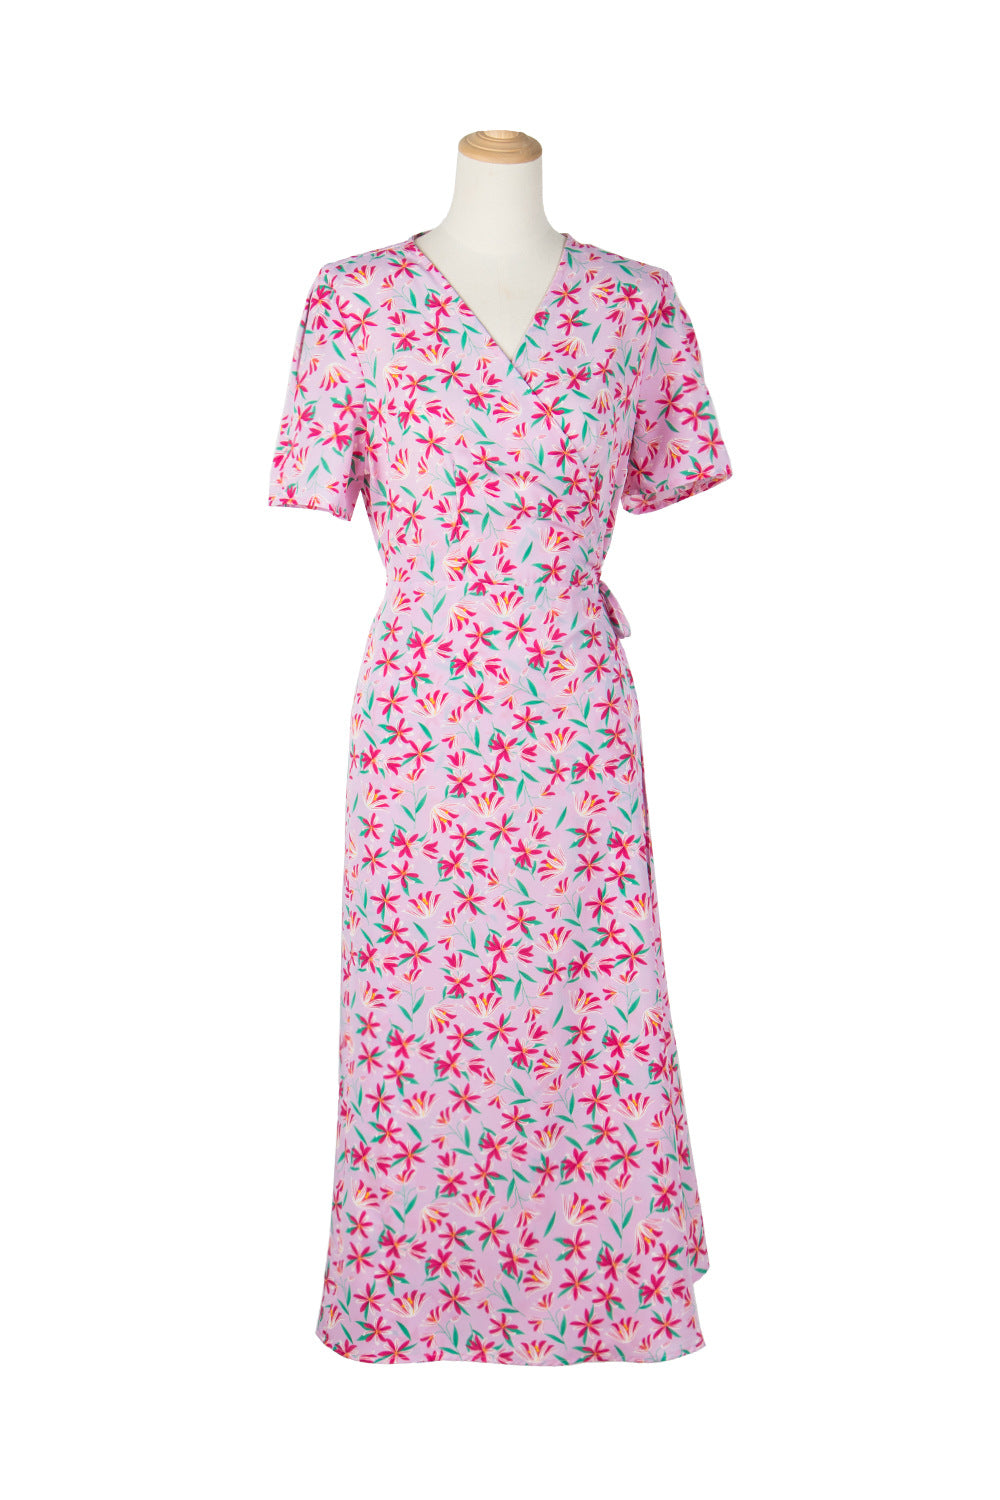 Floral Surplice Neck Short Sleeve Dress - Cheeky Chic Boutique